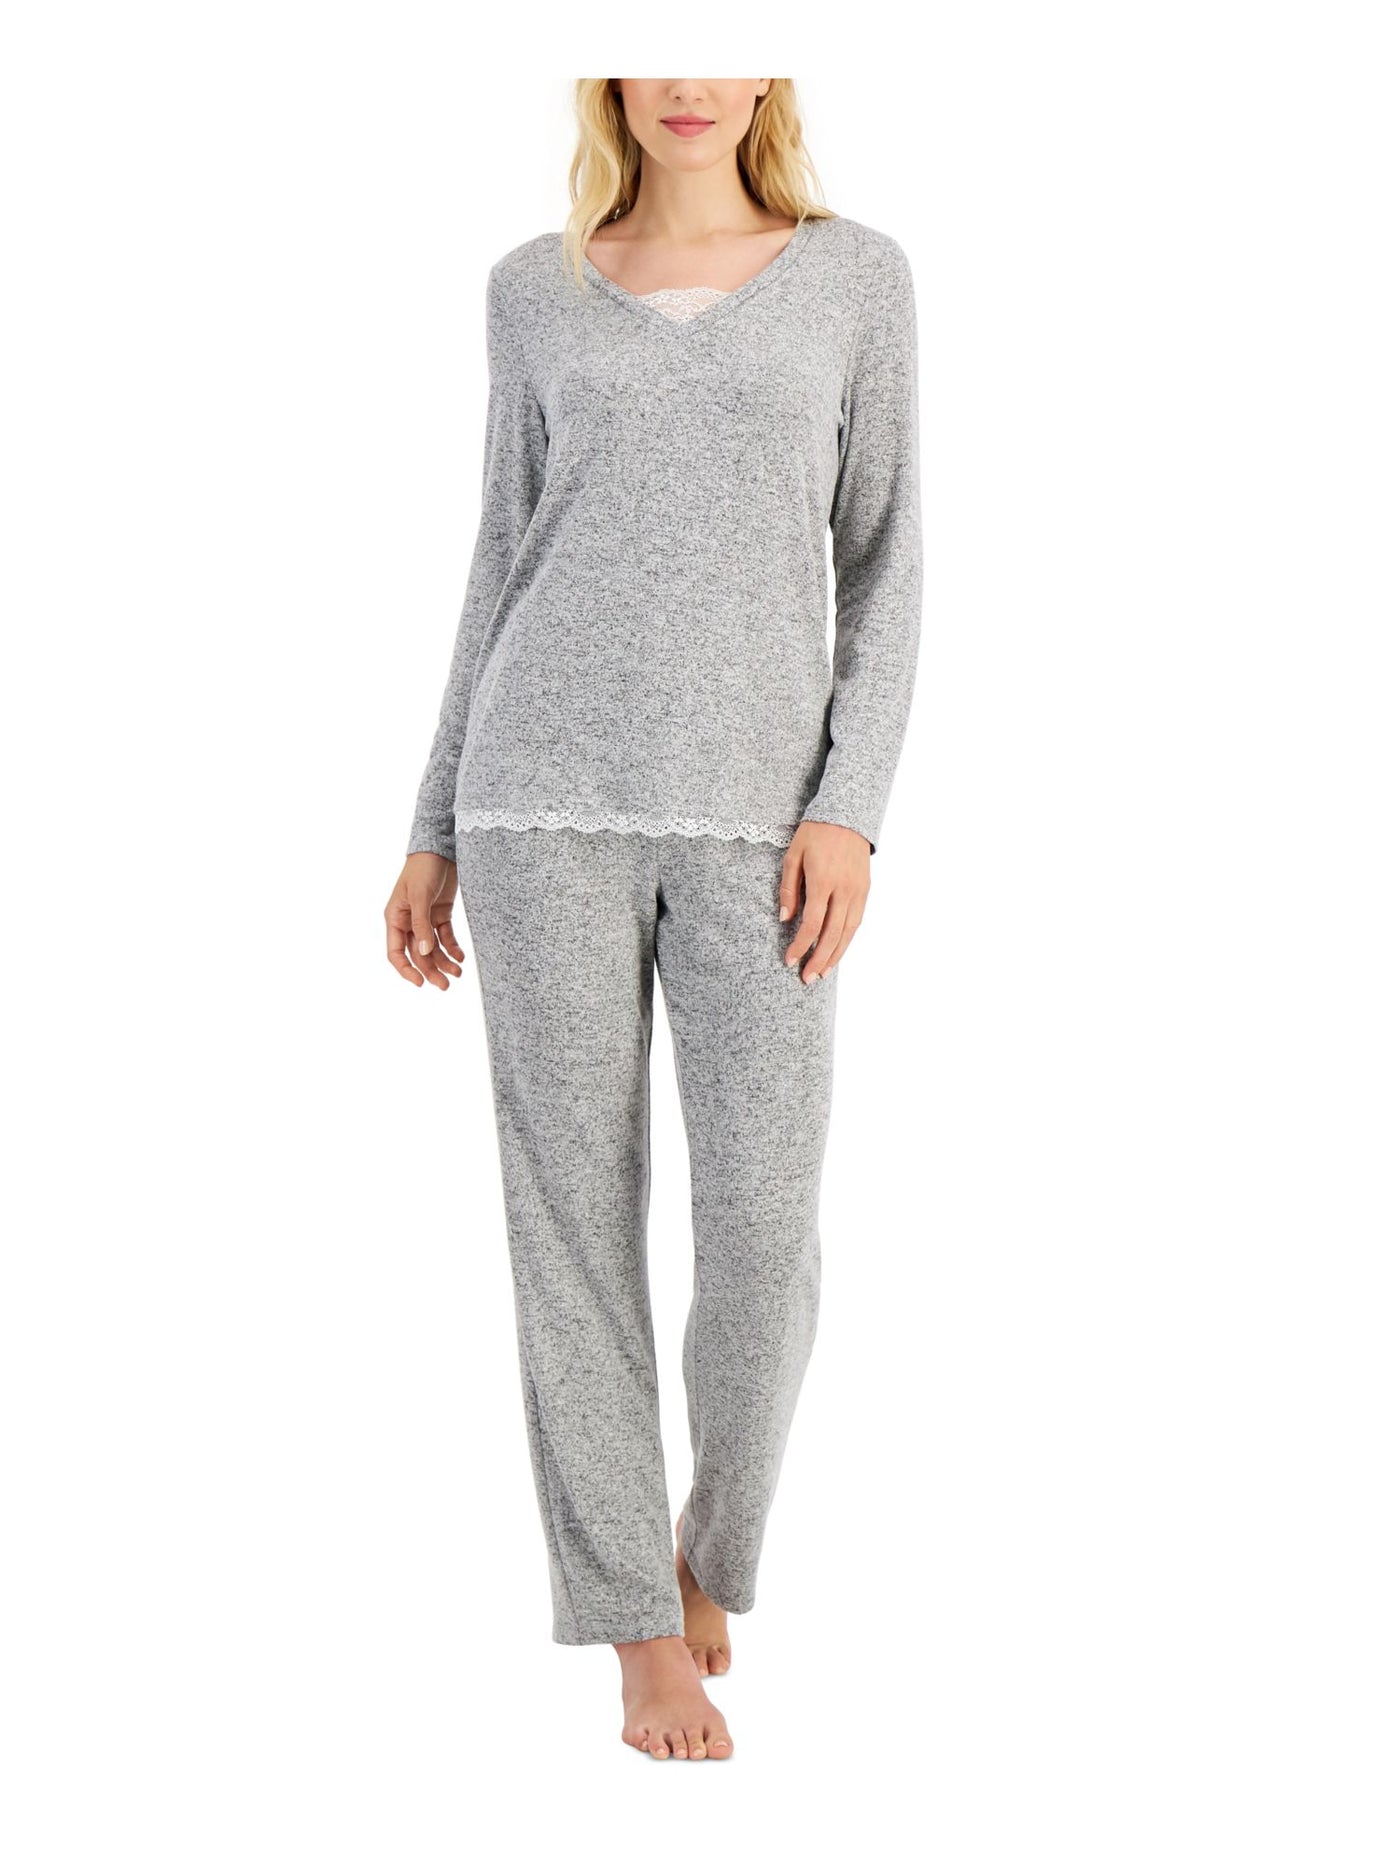 CHARTER CLUB Intimates Gray Pocketed Pajamas XL